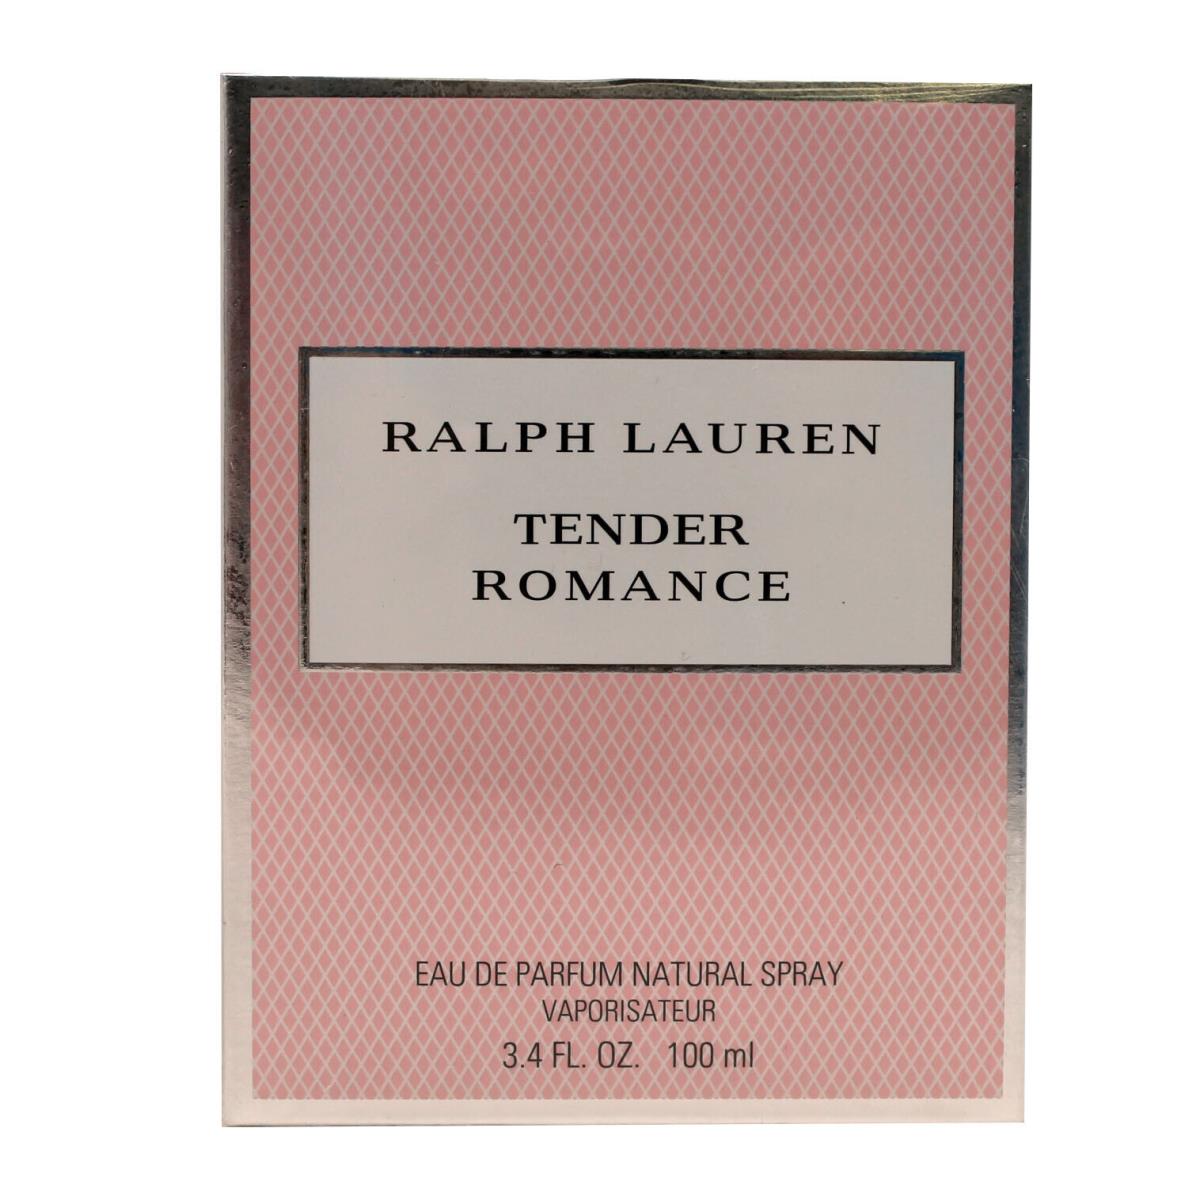 Tender Romance by Ralph Lauren Edp Eau de Parfum For Women 3.4 oz 100 ml